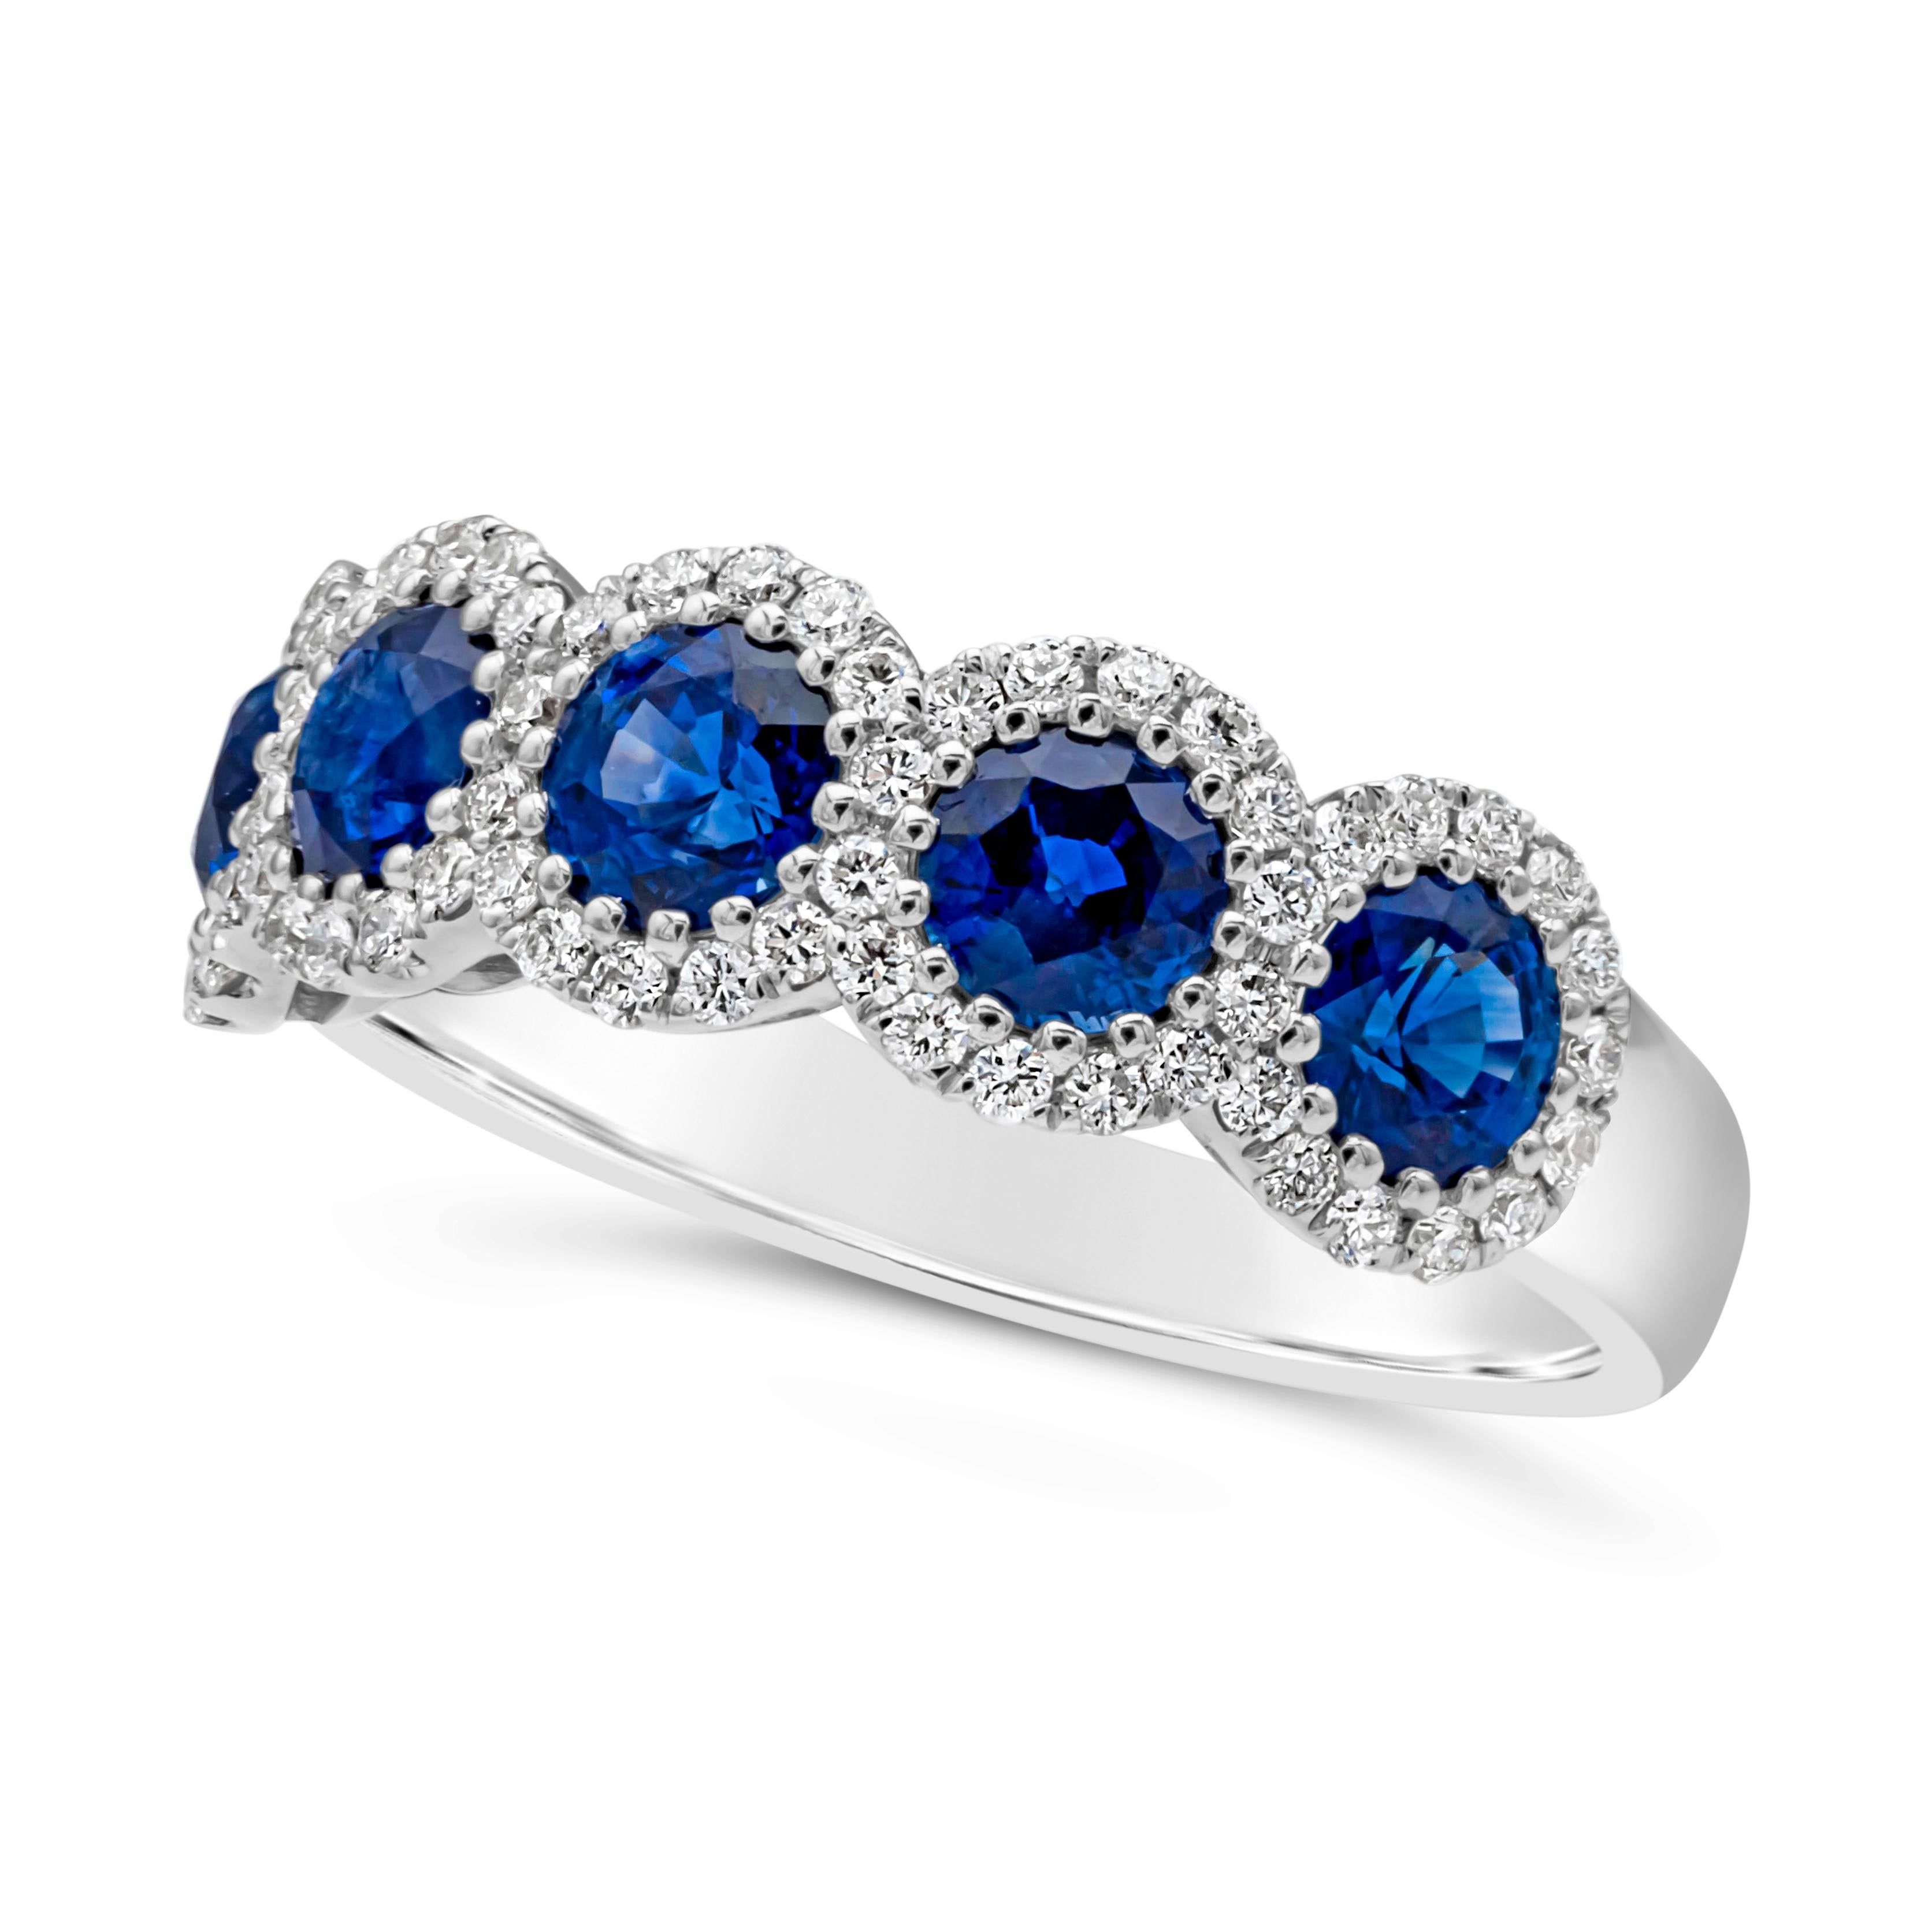 Contemporary Roman Malakov 1.88 Carats Total Round Cut Blue Sapphire & Diamond Wedding Band For Sale